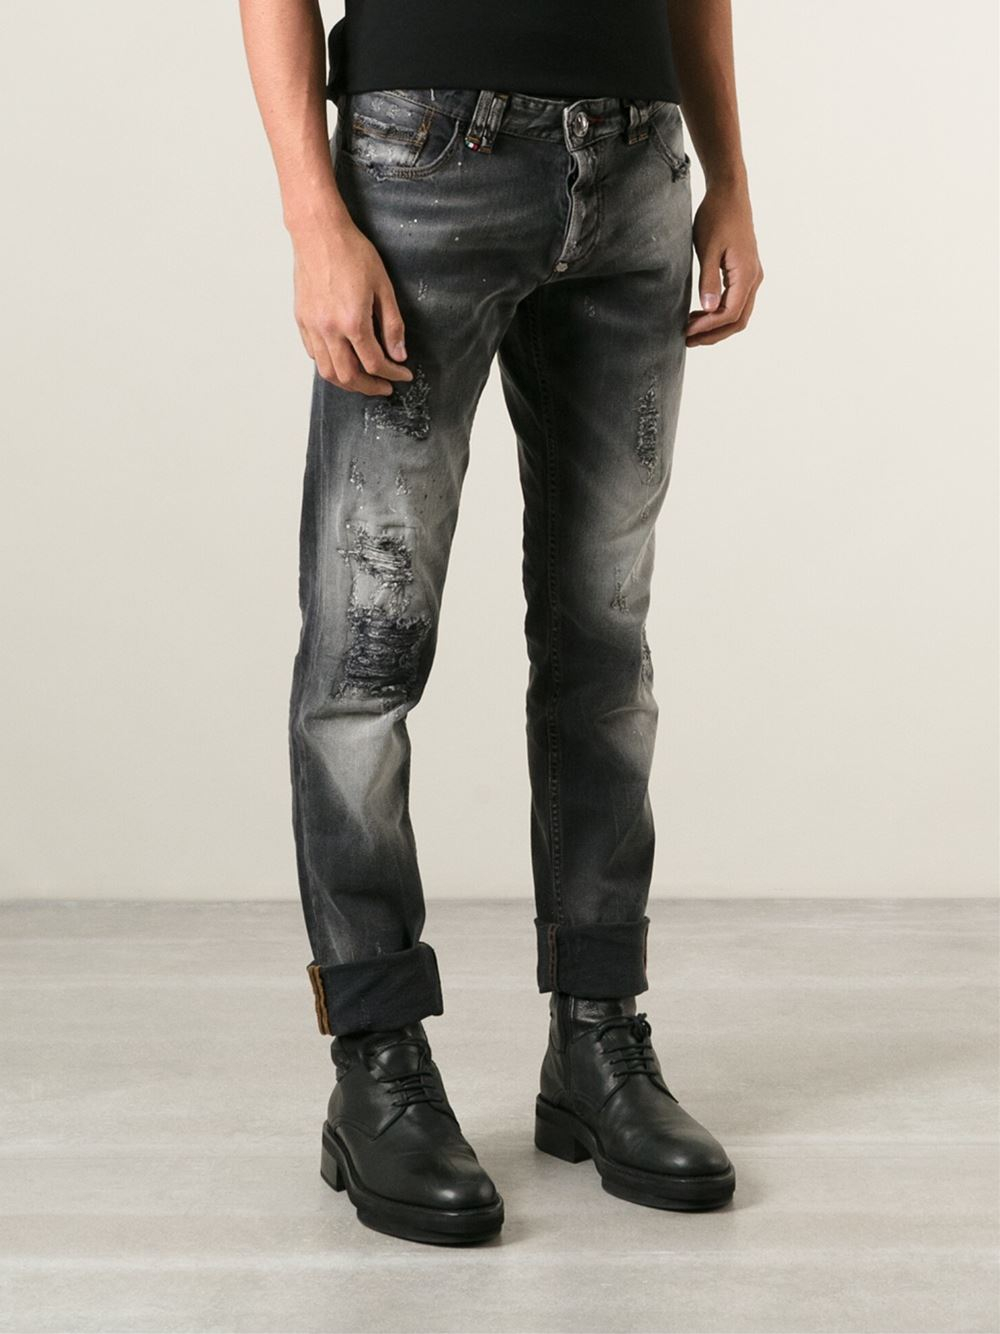 Lyst - Philipp Plein Cowboy Jeans in Black for Men